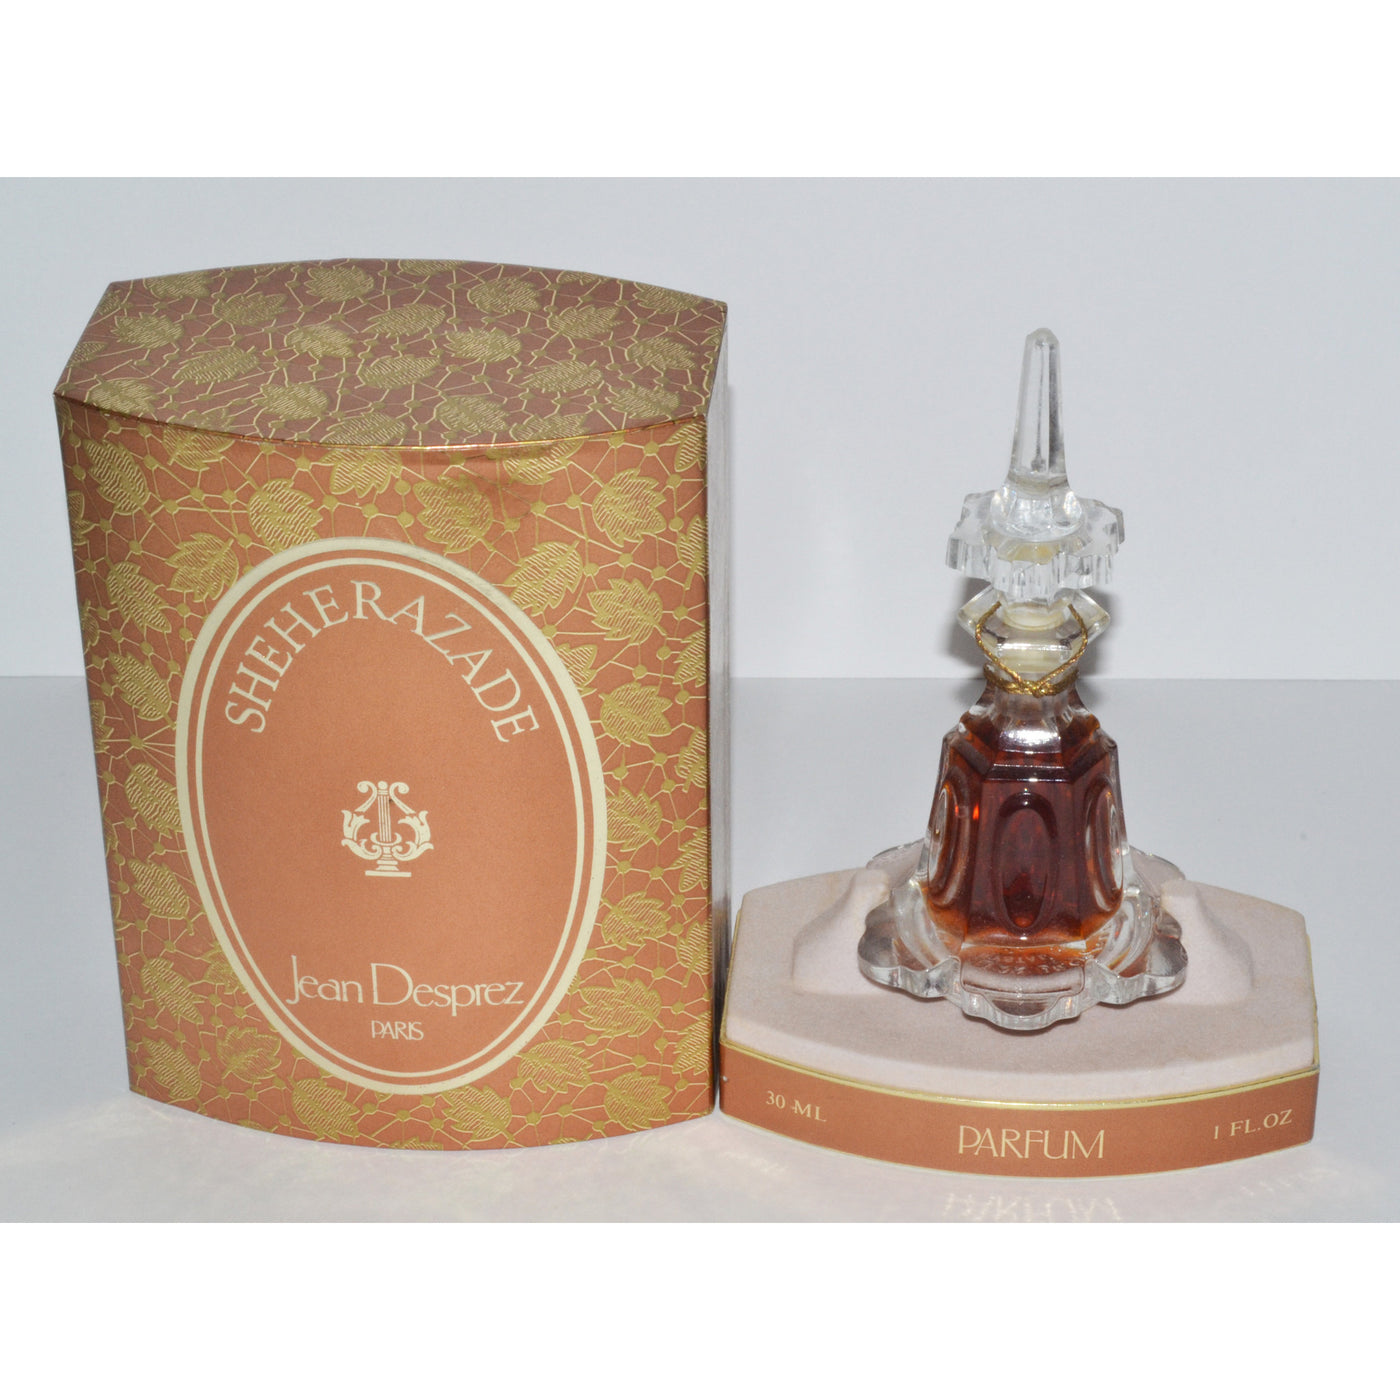 Vintage Jean Desprez Sheherazade Perfume